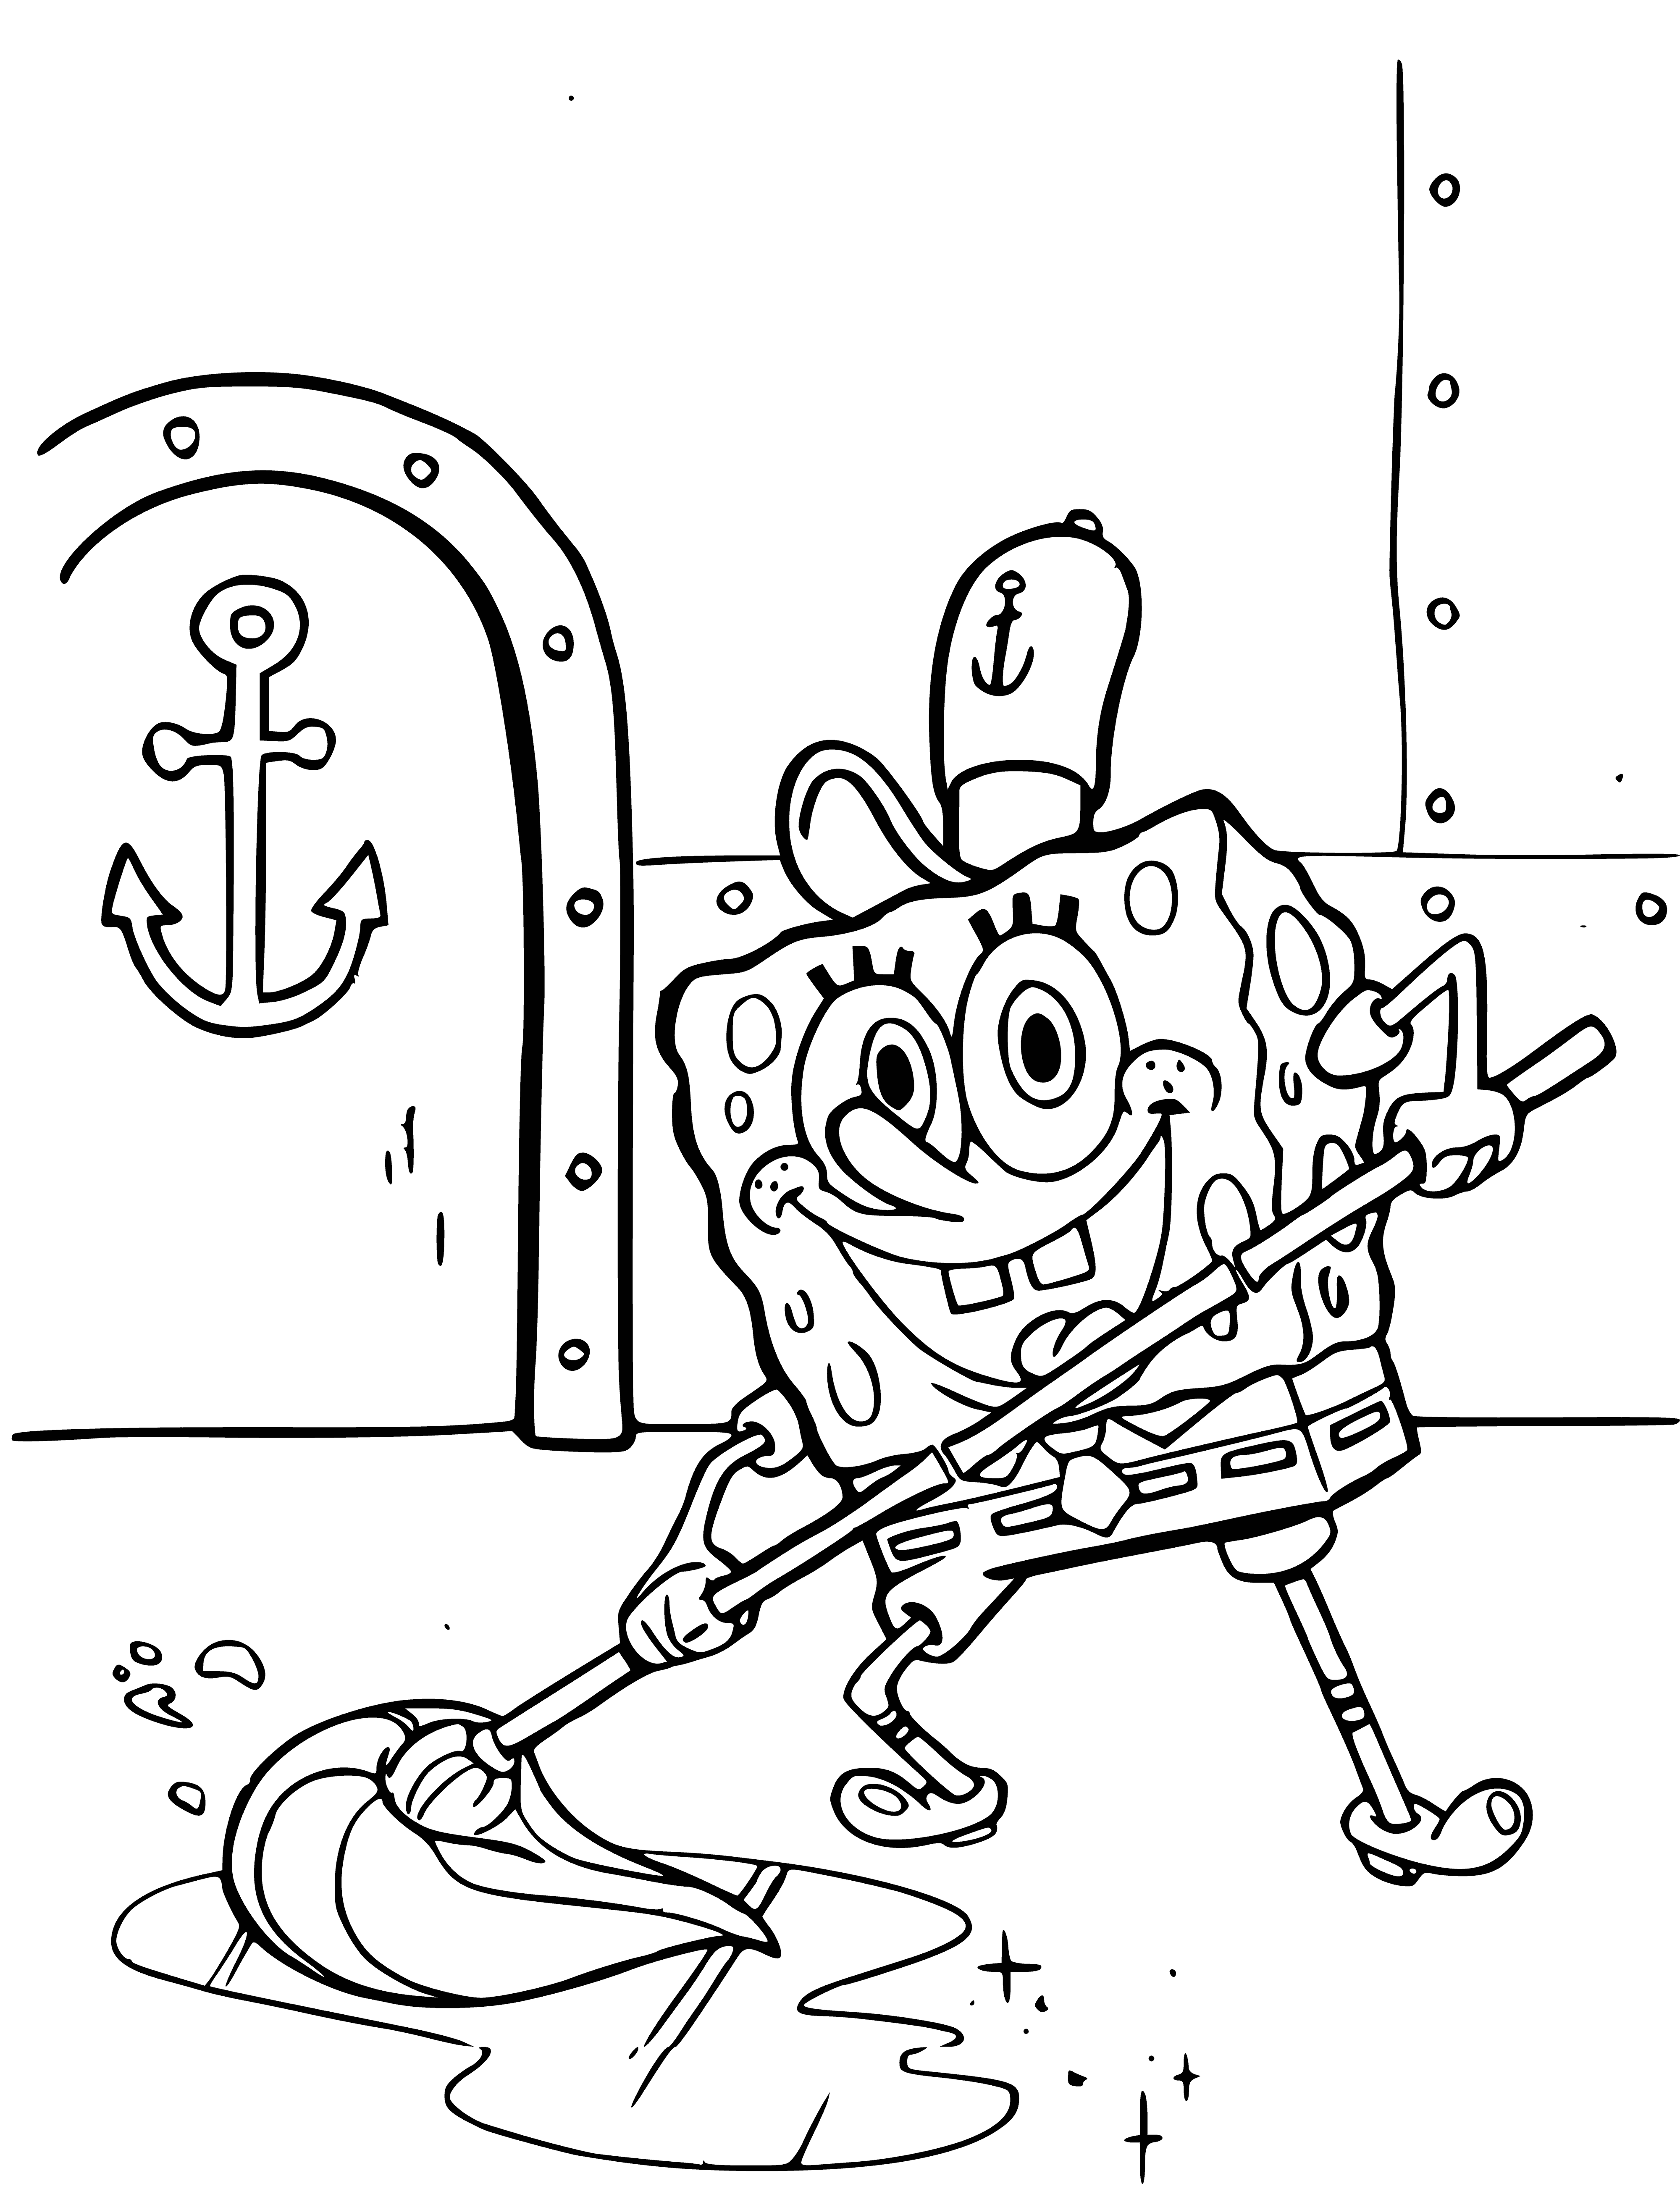 SpongeBob at work coloring page